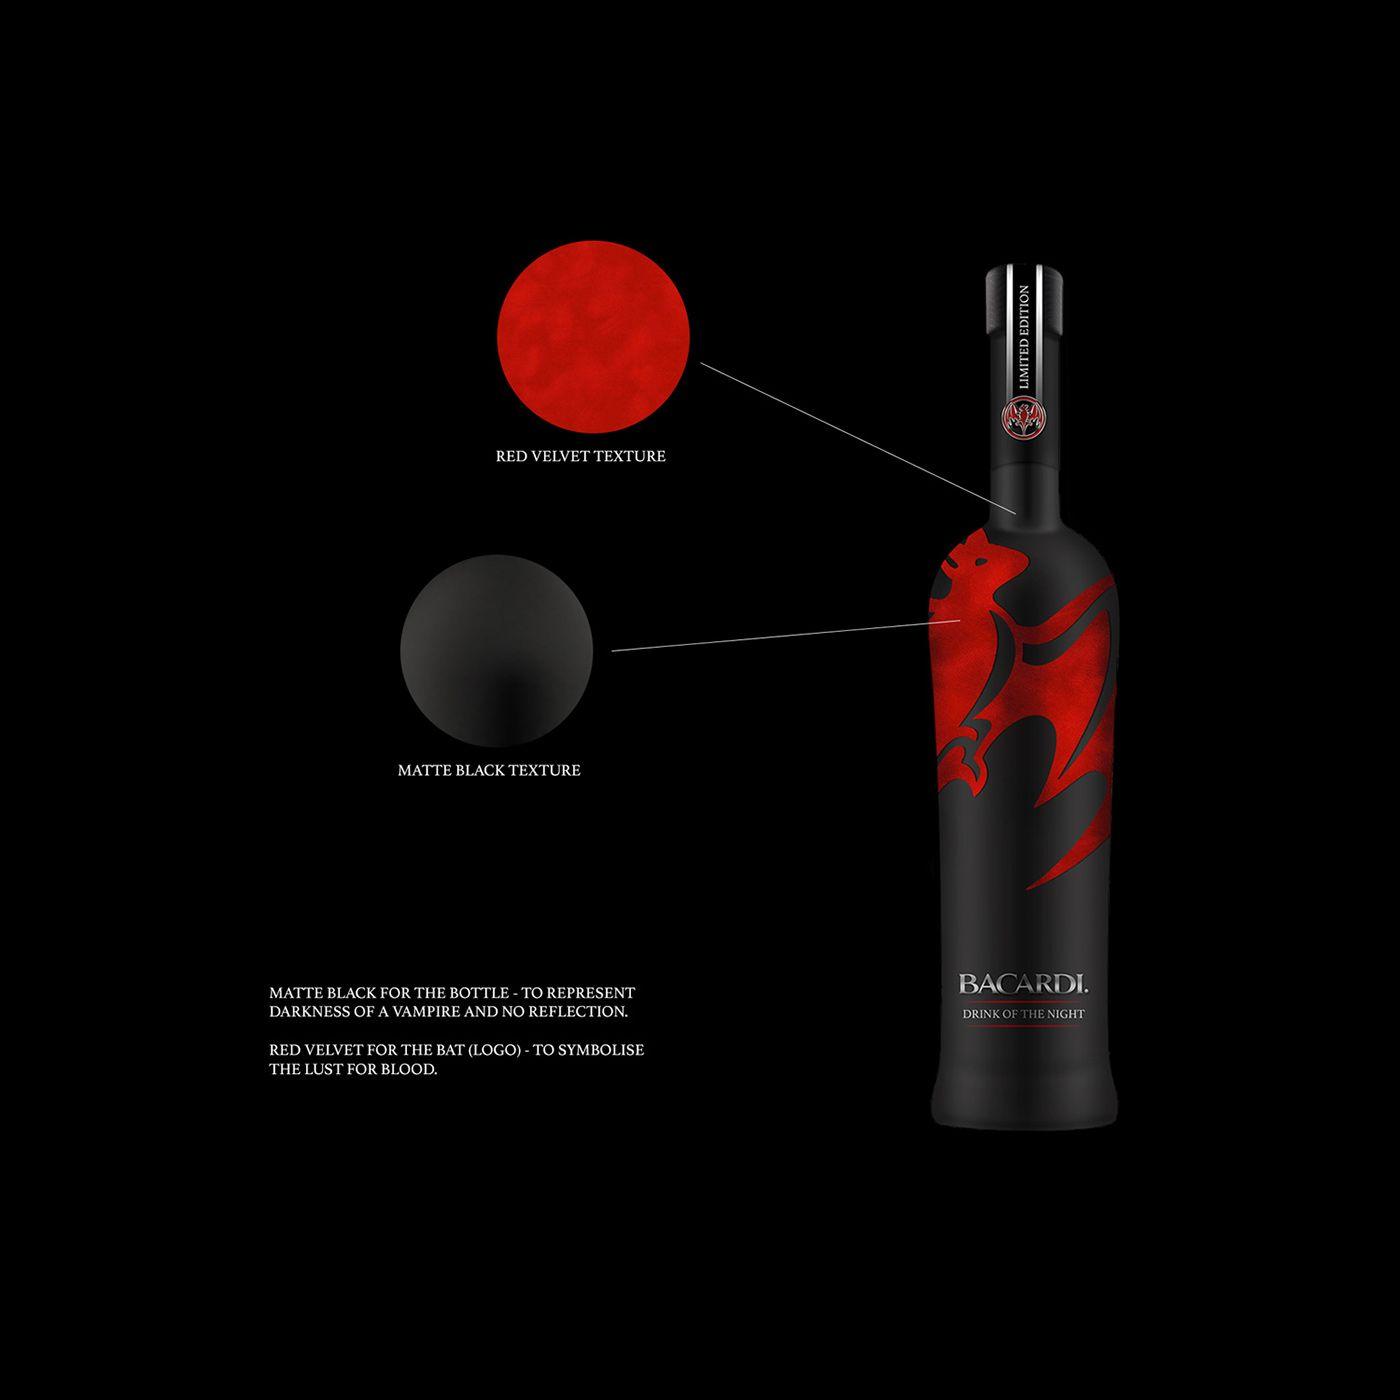 Bacardi Rum Bat Logo - BACARDI - The Drink of the Night on Behance